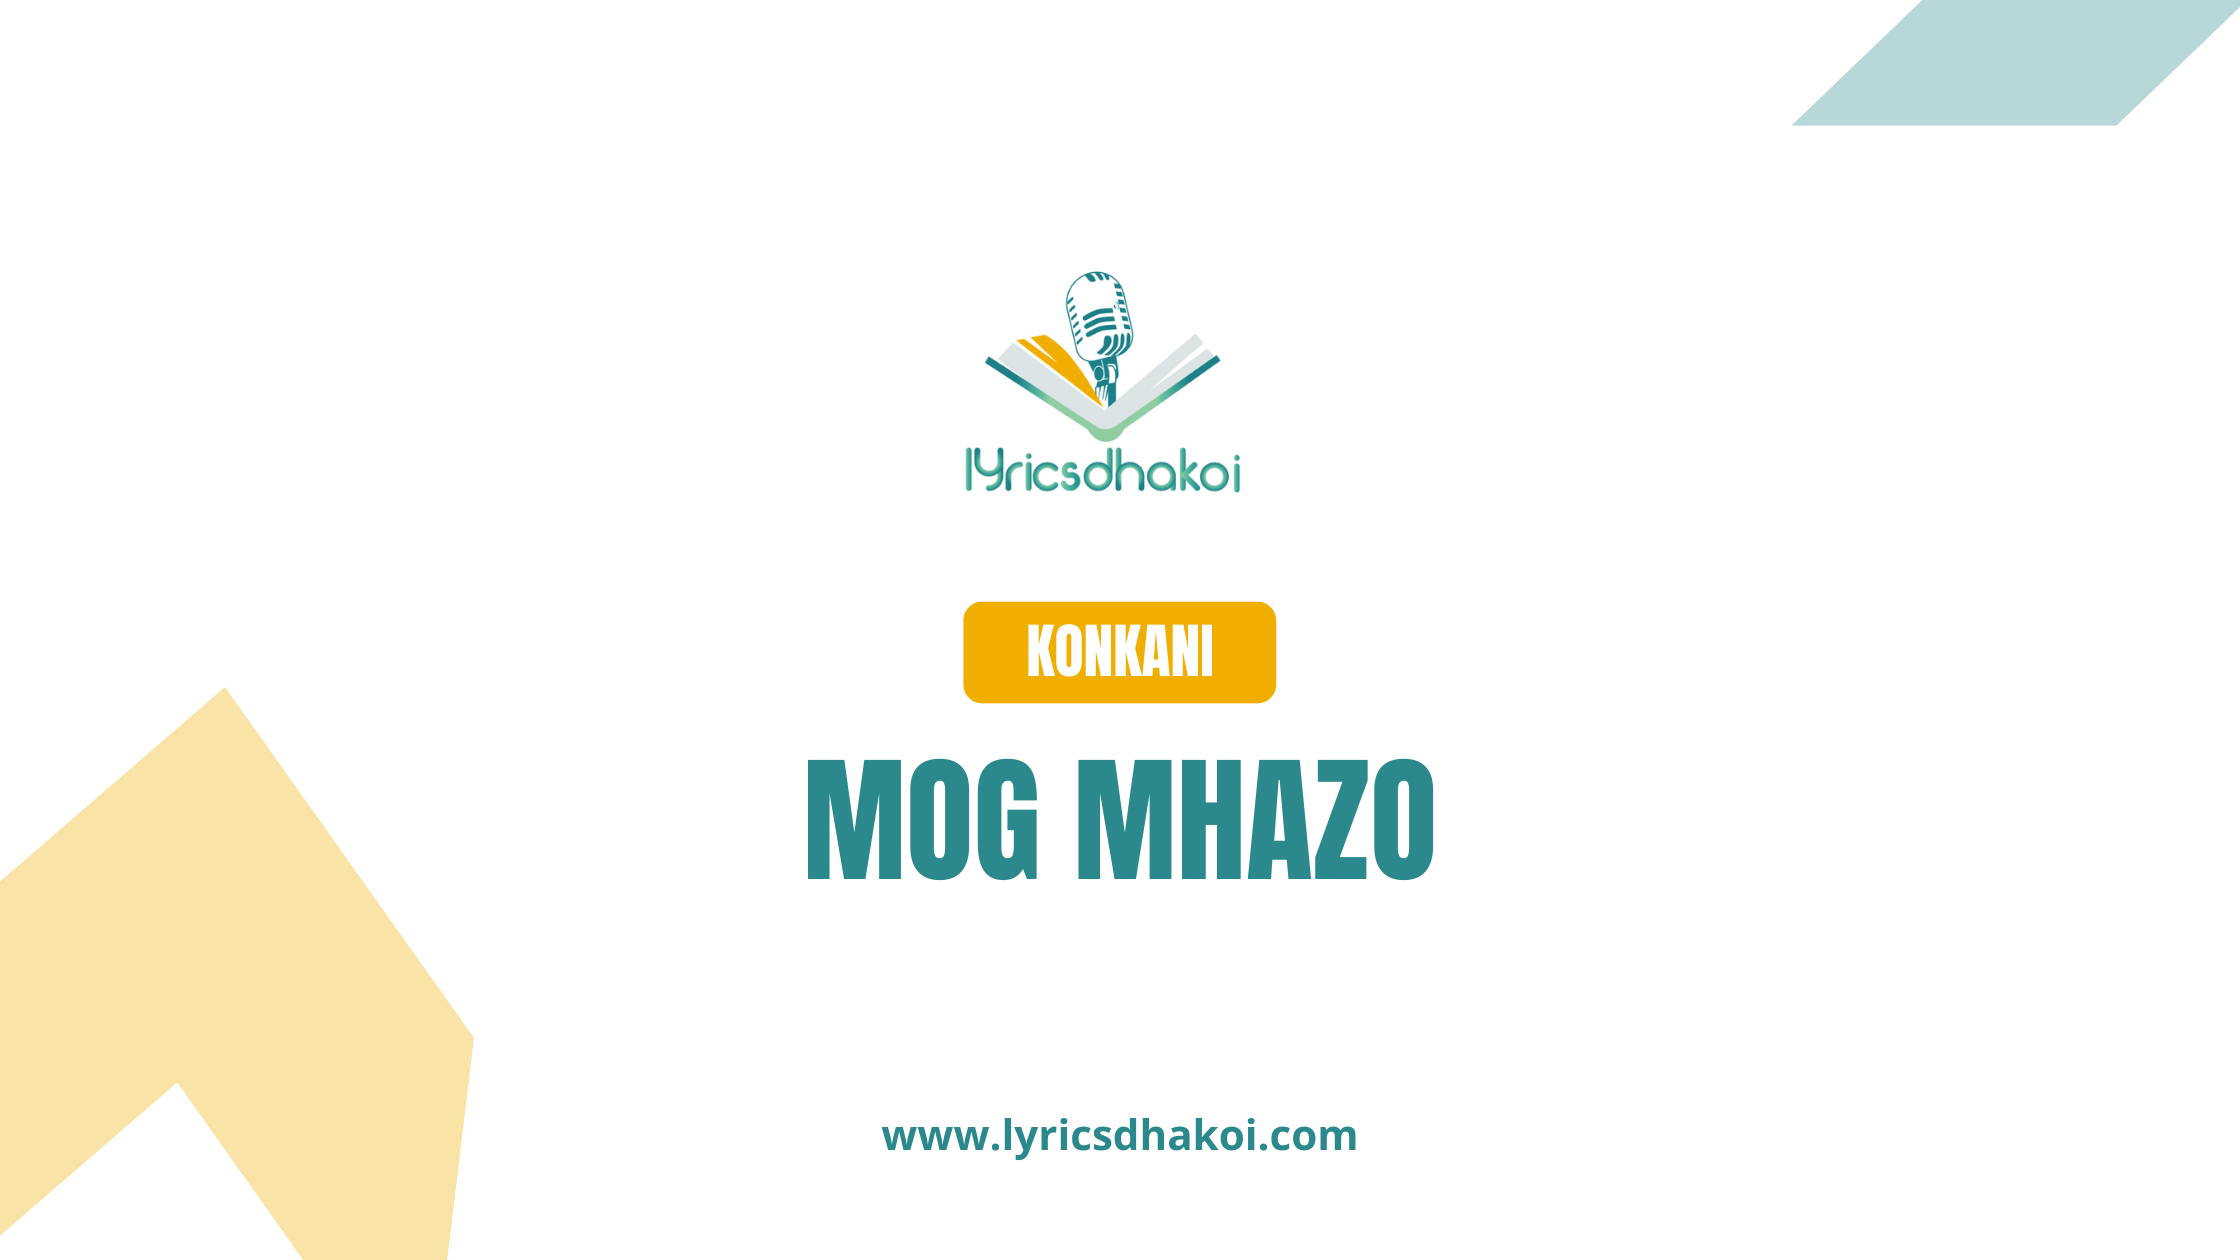 Mog Mhazo Konkani Lyrics for Karaoke Online - LyricsDhakoi.com